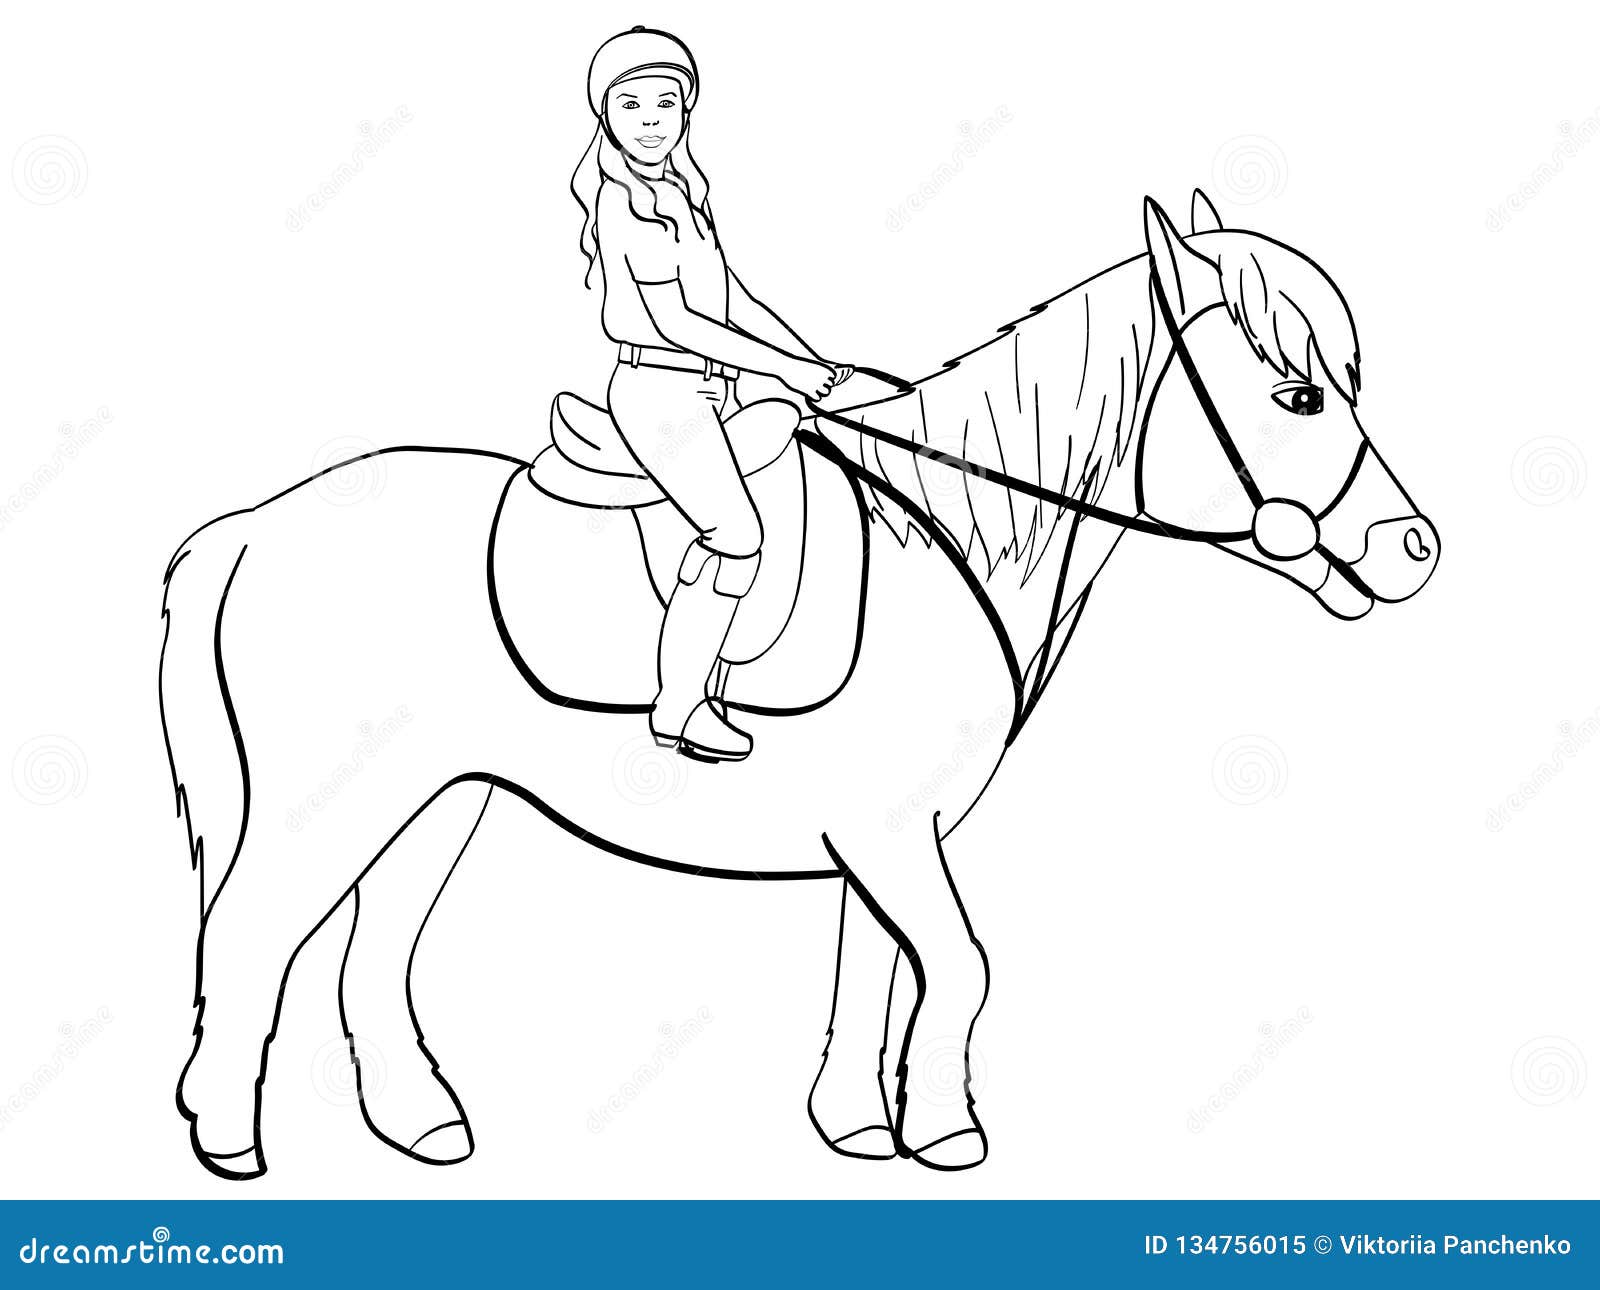 equestrian sport for children. raster illustratio.  object on white background. book coloring for children